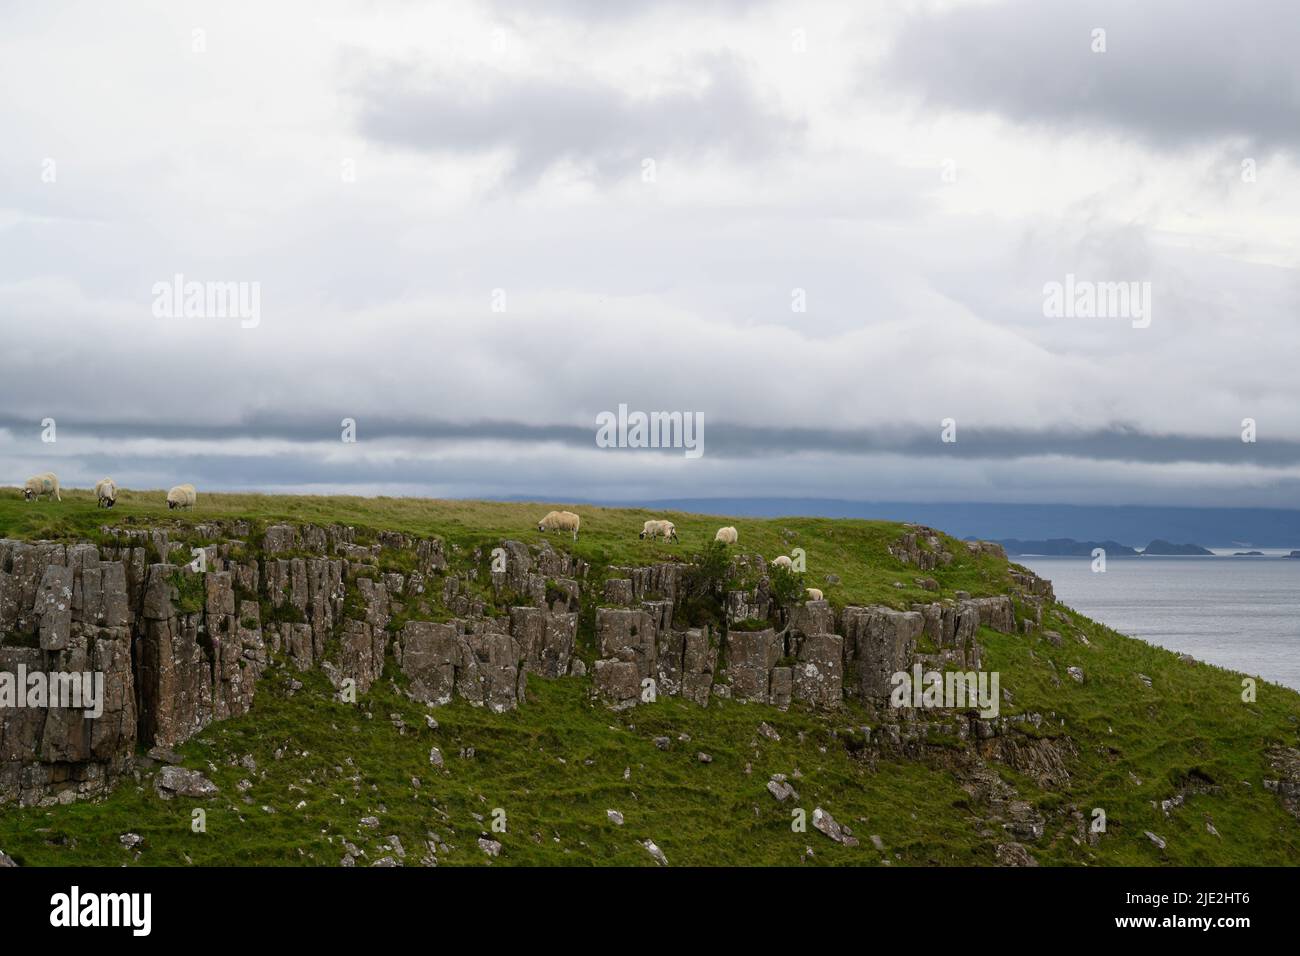 Green Cliffs on a Scottish Coastline Stock Photo